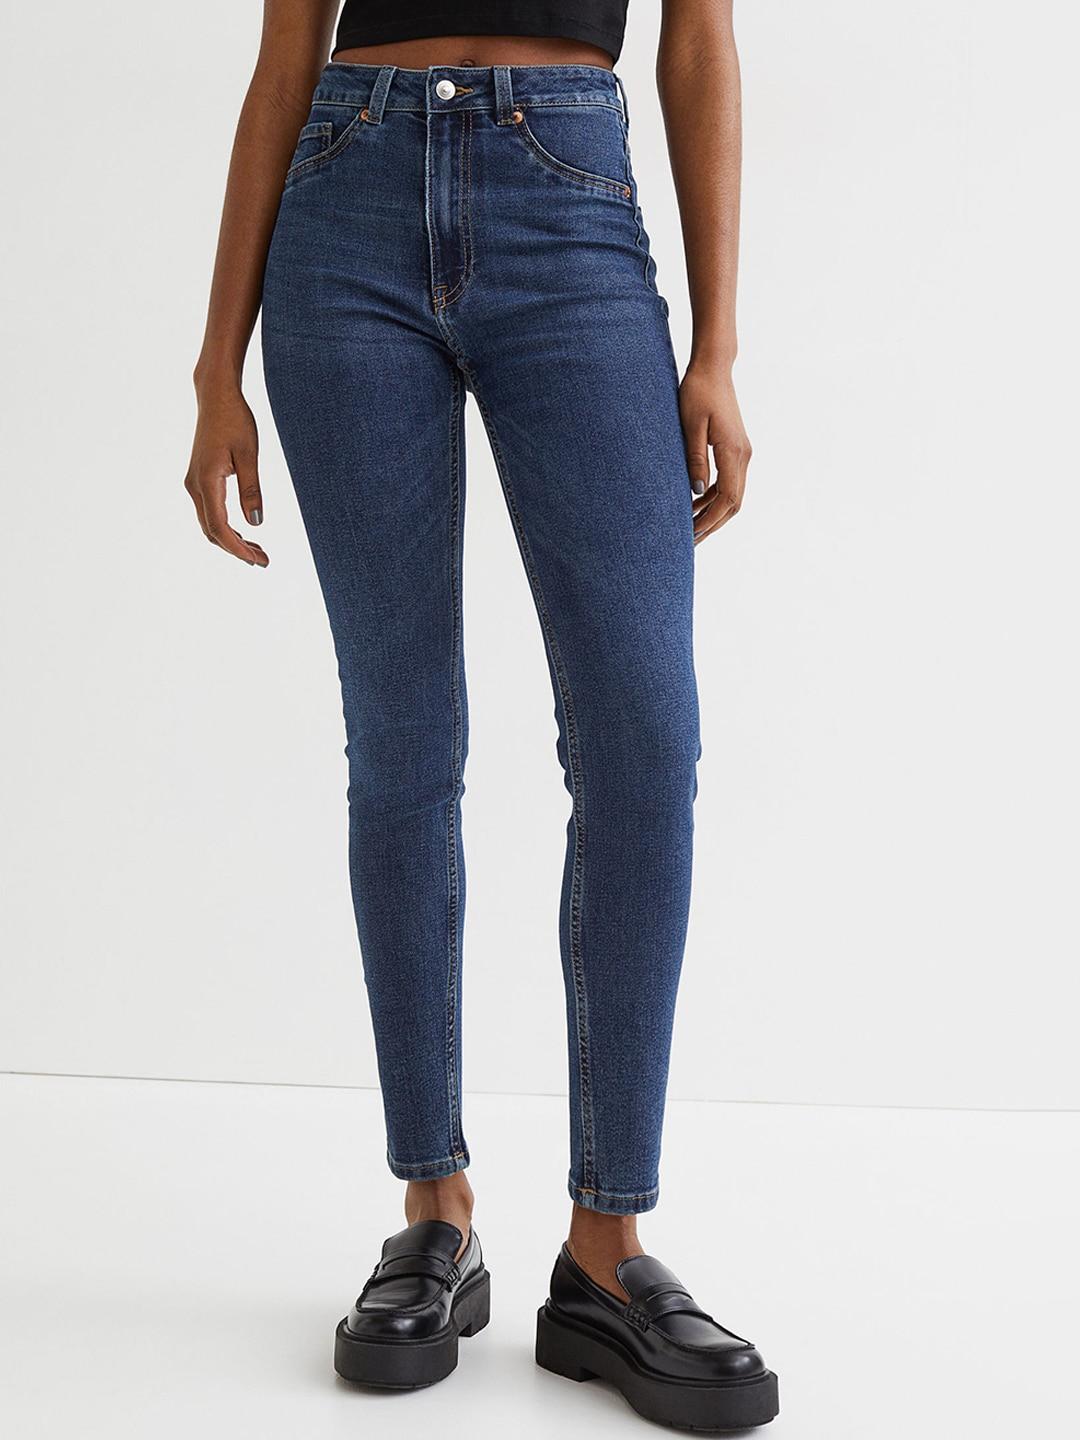 h&m-women-blue-skinny-high-jeans